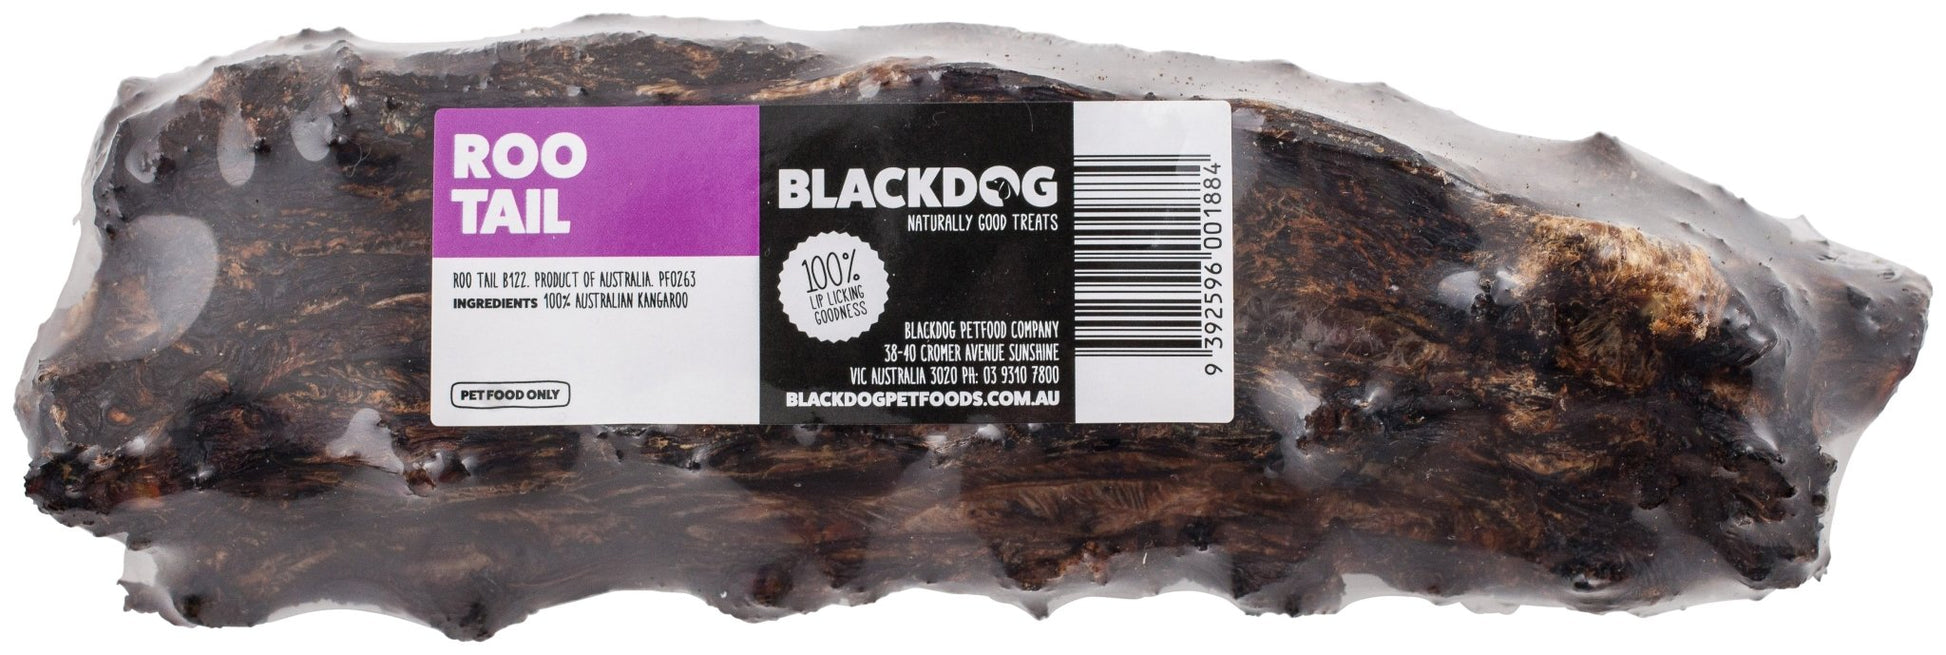 Blackdog Roo Tail Large - Woonona Petfood & Produce